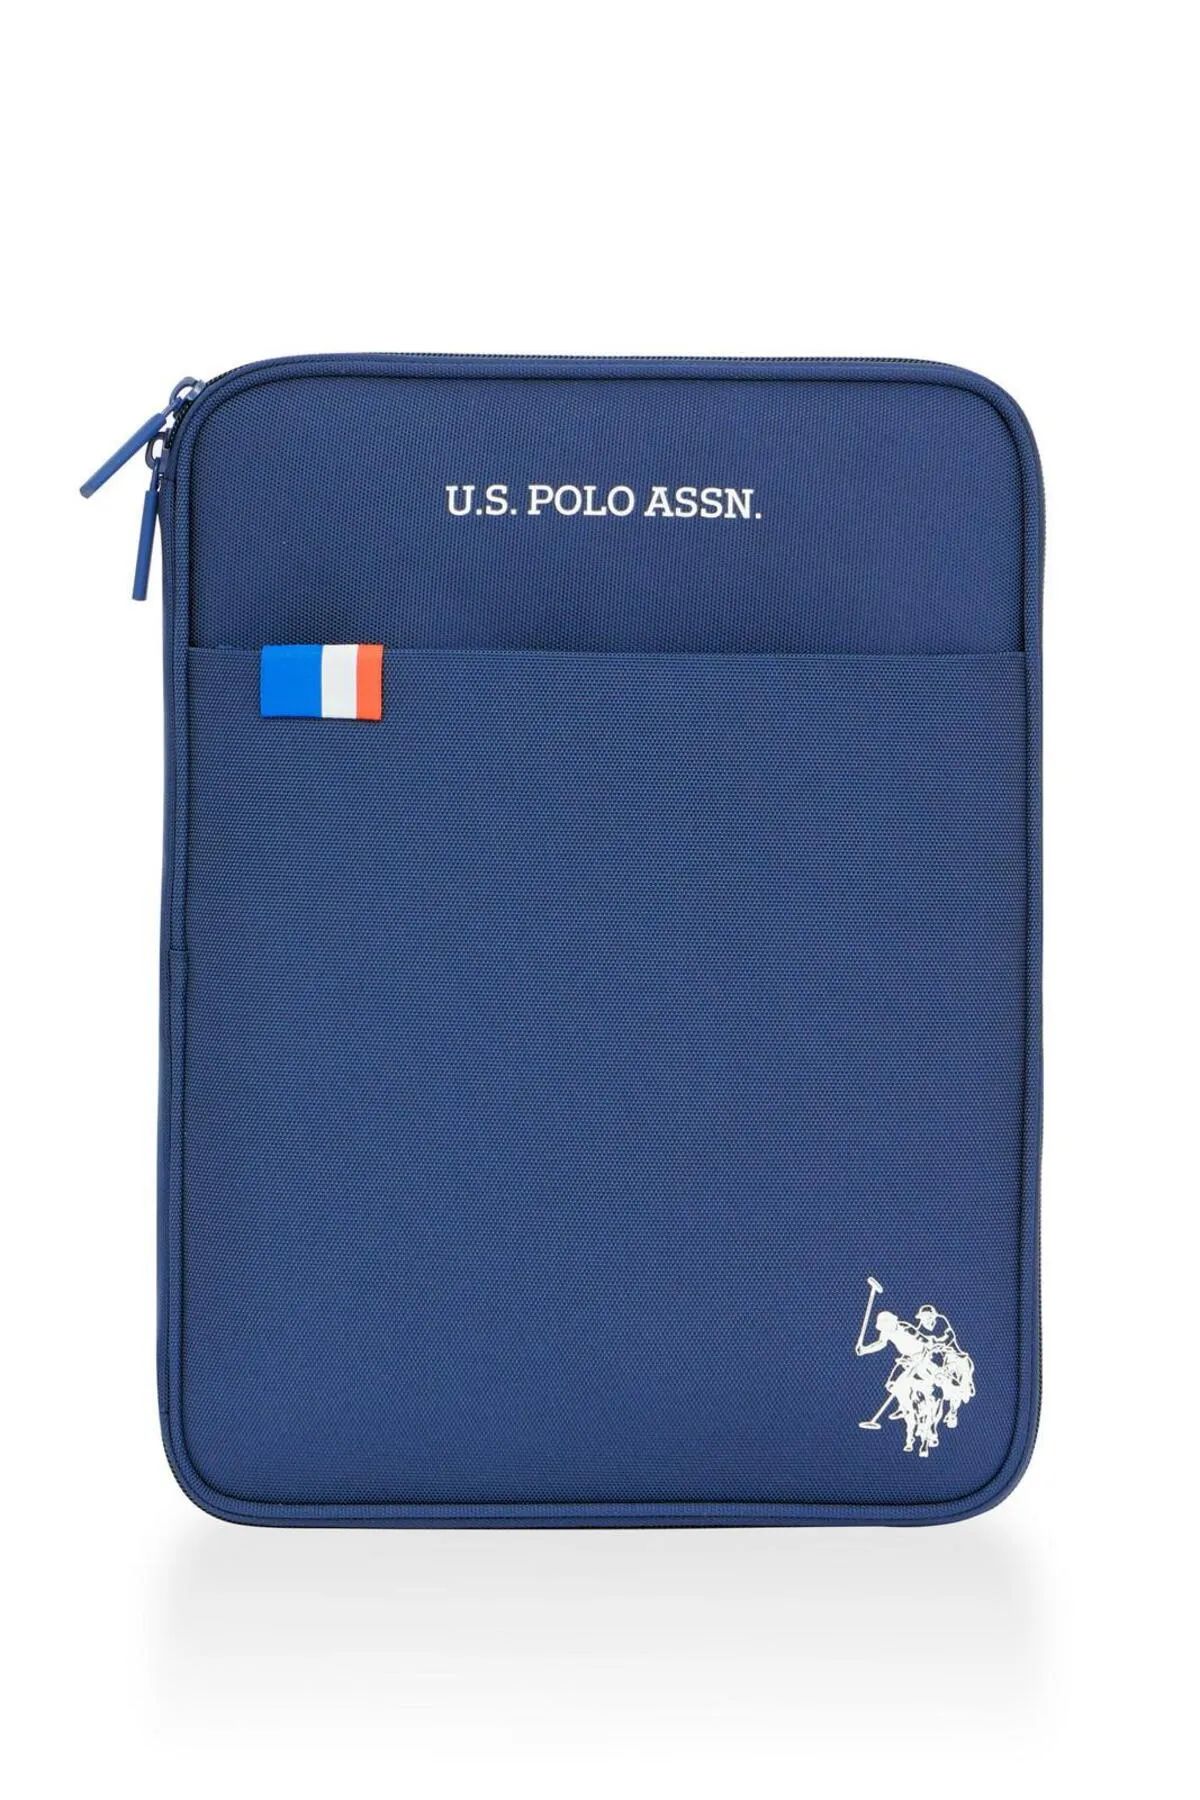 U.S. Polo Assn. U.s. Polo Assn. Macbook Air - Macbook Pro 13&13.3 İnç Uyumlu Laptop Kılıfı Lacivert PLEVR23702